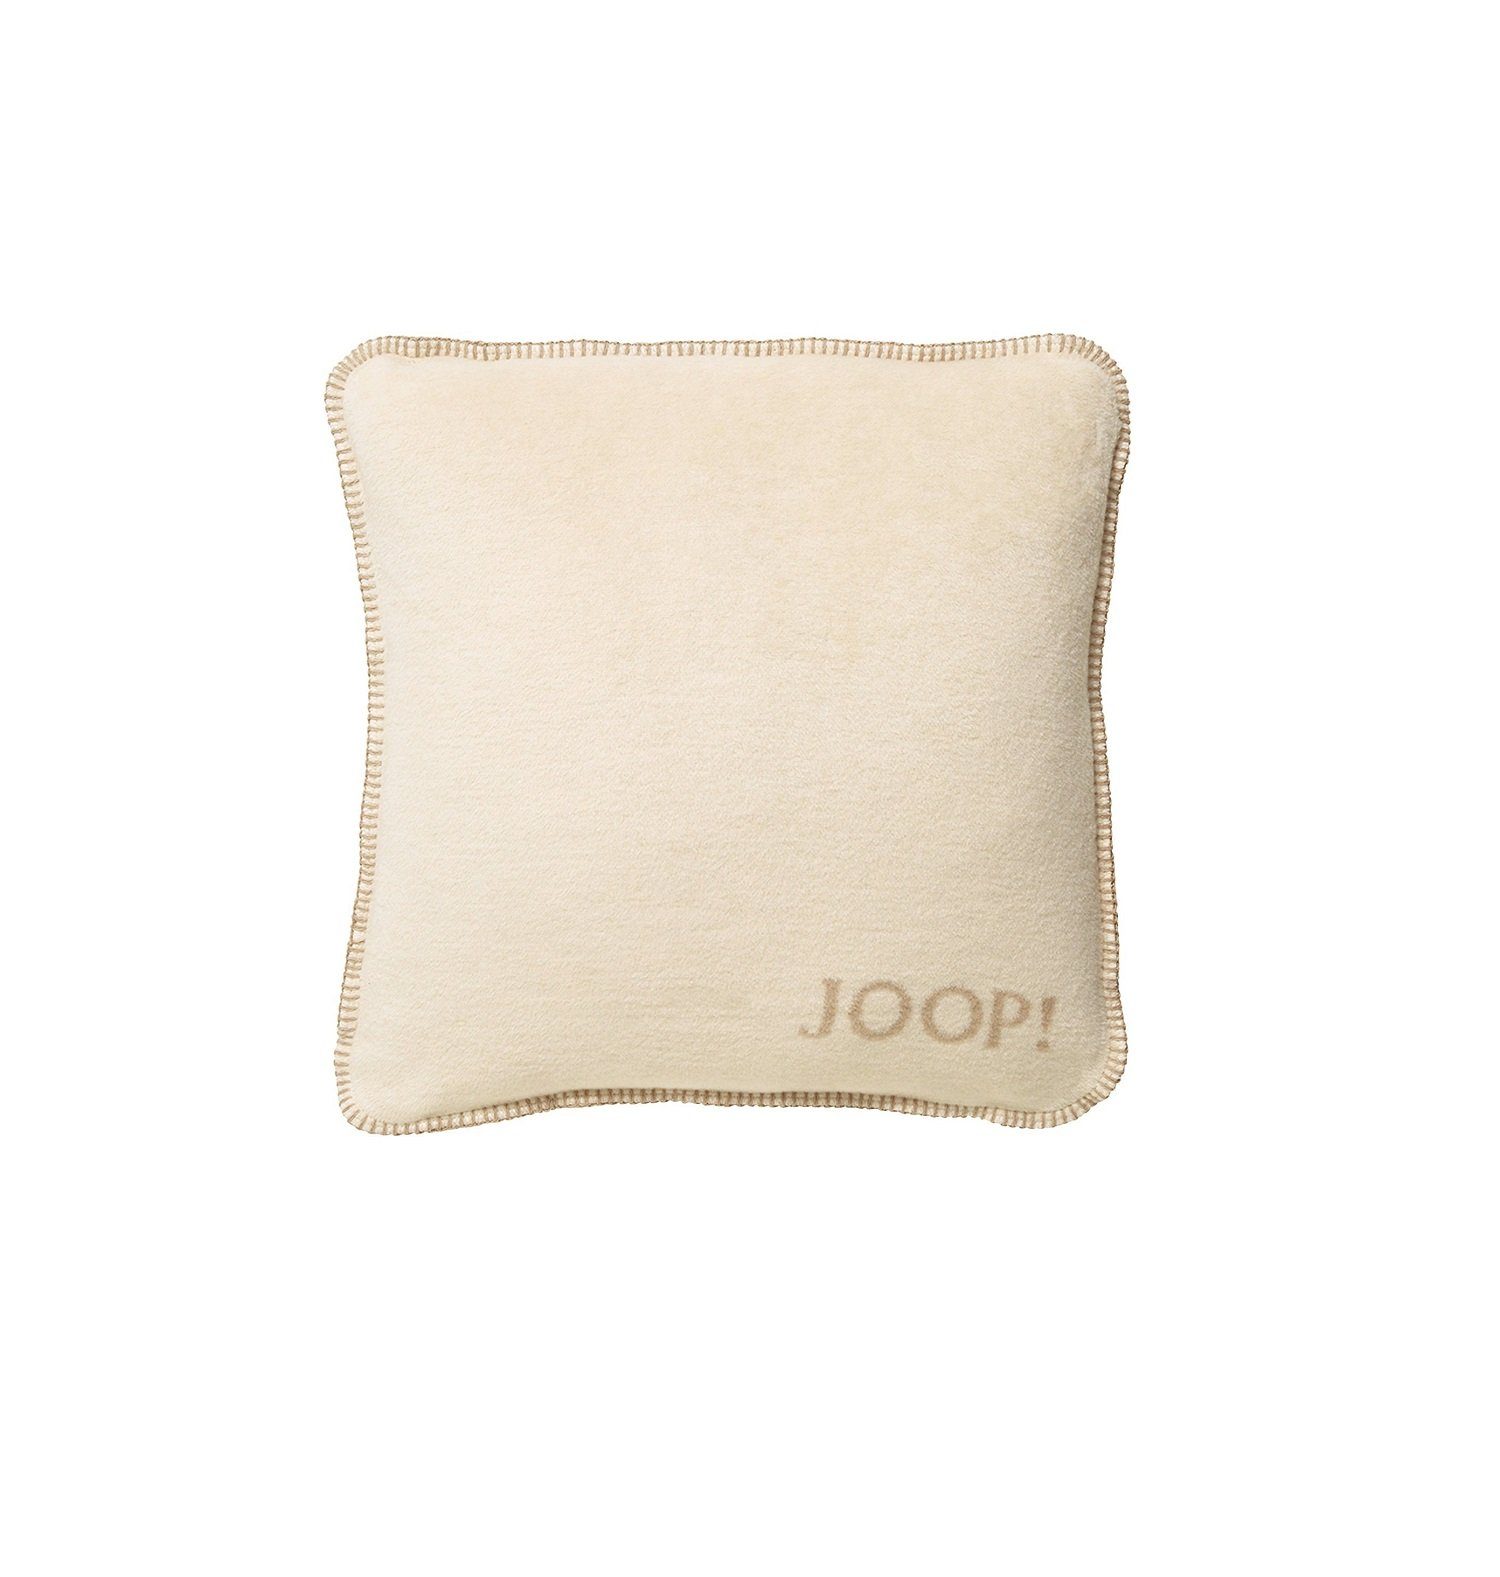 Kissenhülle JOOP! Kissenhülle Uni-Doubleface Reißverschluss Fleece Qualität, Pergament-Sand auf Joop!, der Rückseite Qualität, Fleece weiche